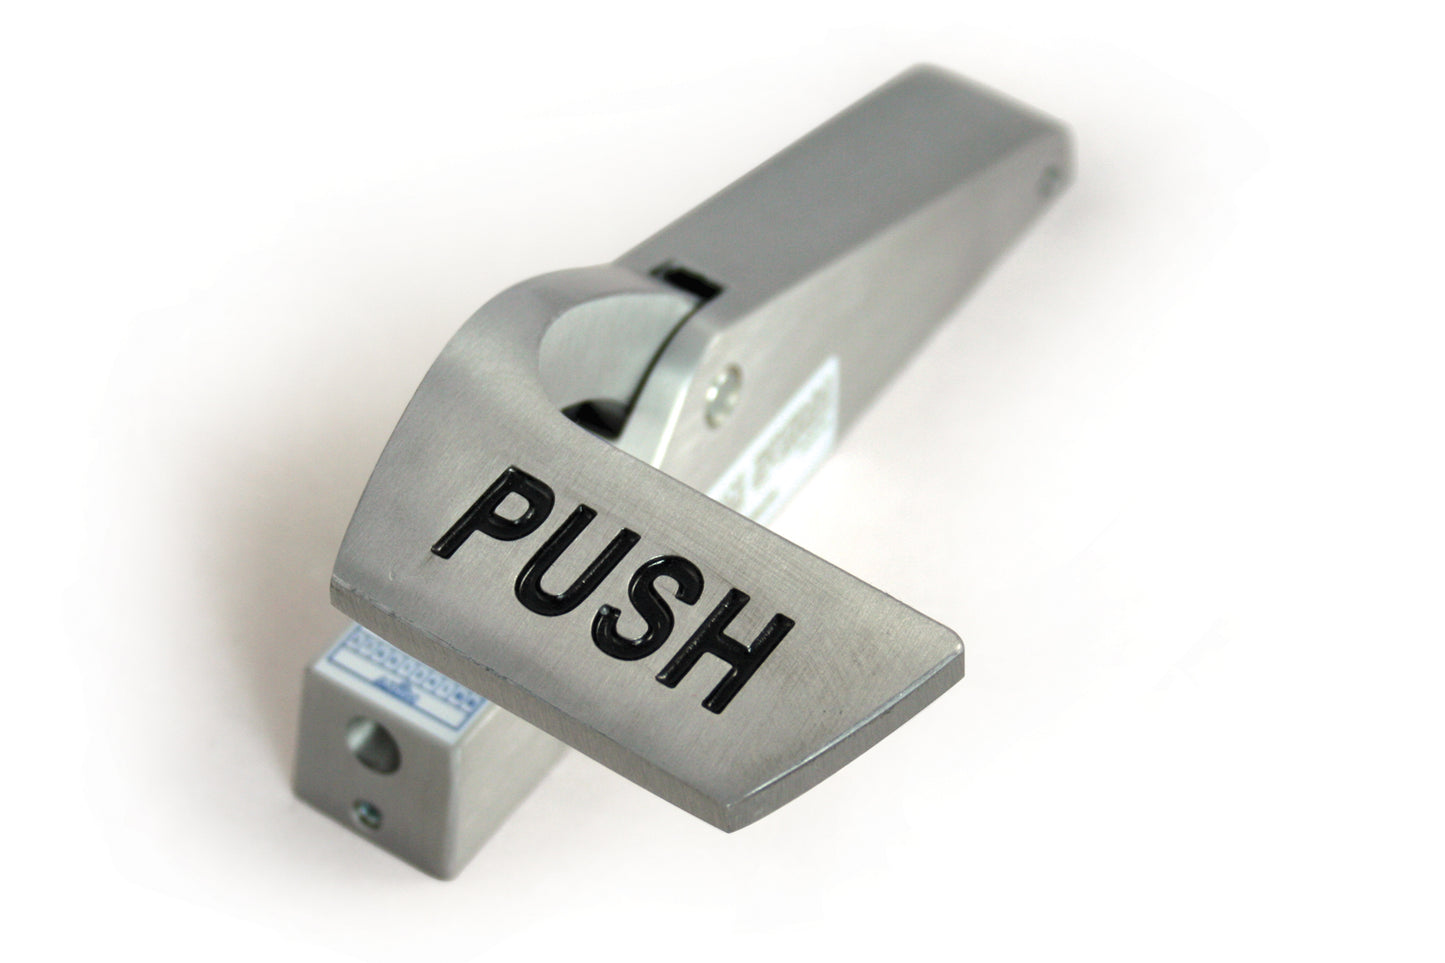 Axim PR7095P - Push Pad Panic Latch Fire Escape Emergency Exit Device